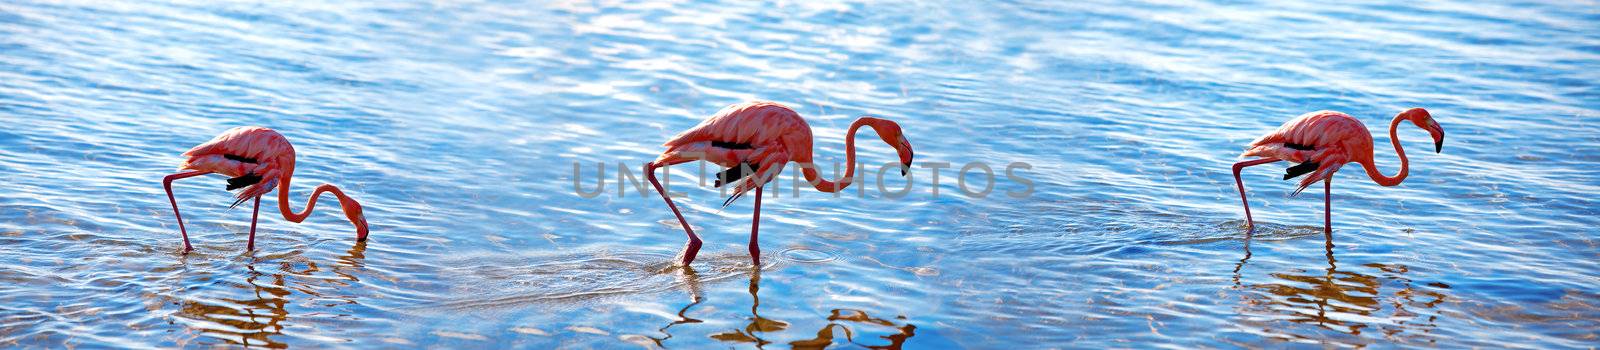 Flamingos by kjorgen